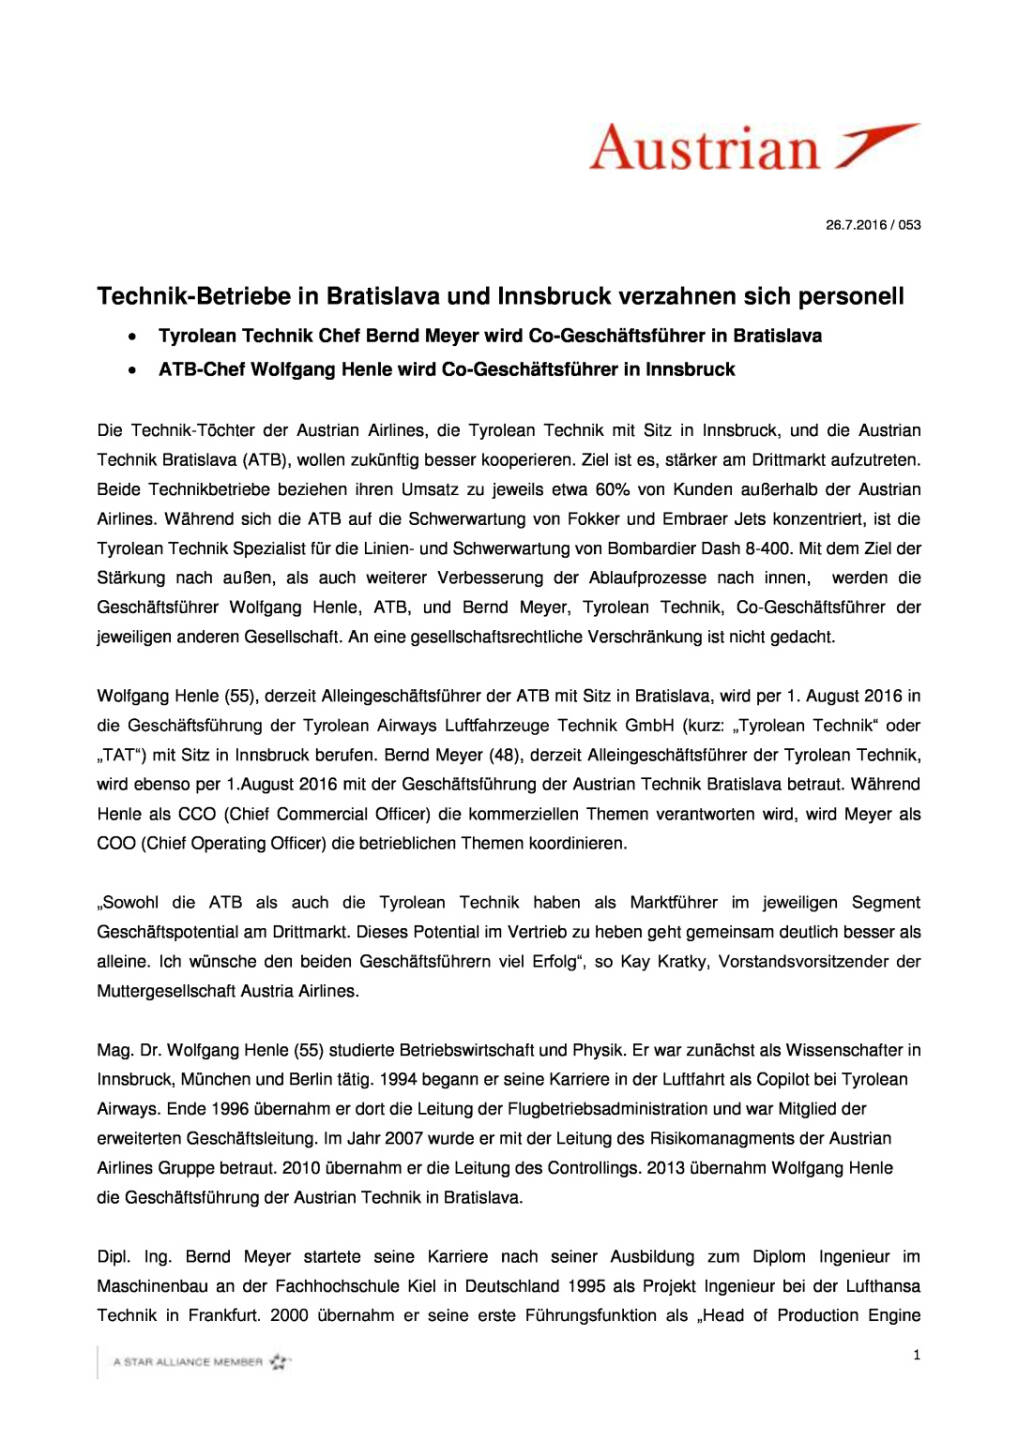 Austrian Airlines: Technikbetriebe, Seite 1/2, komplettes Dokument unter http://boerse-social.com/static/uploads/file_1487_austrian_airlines_technikbetriebe.pdf